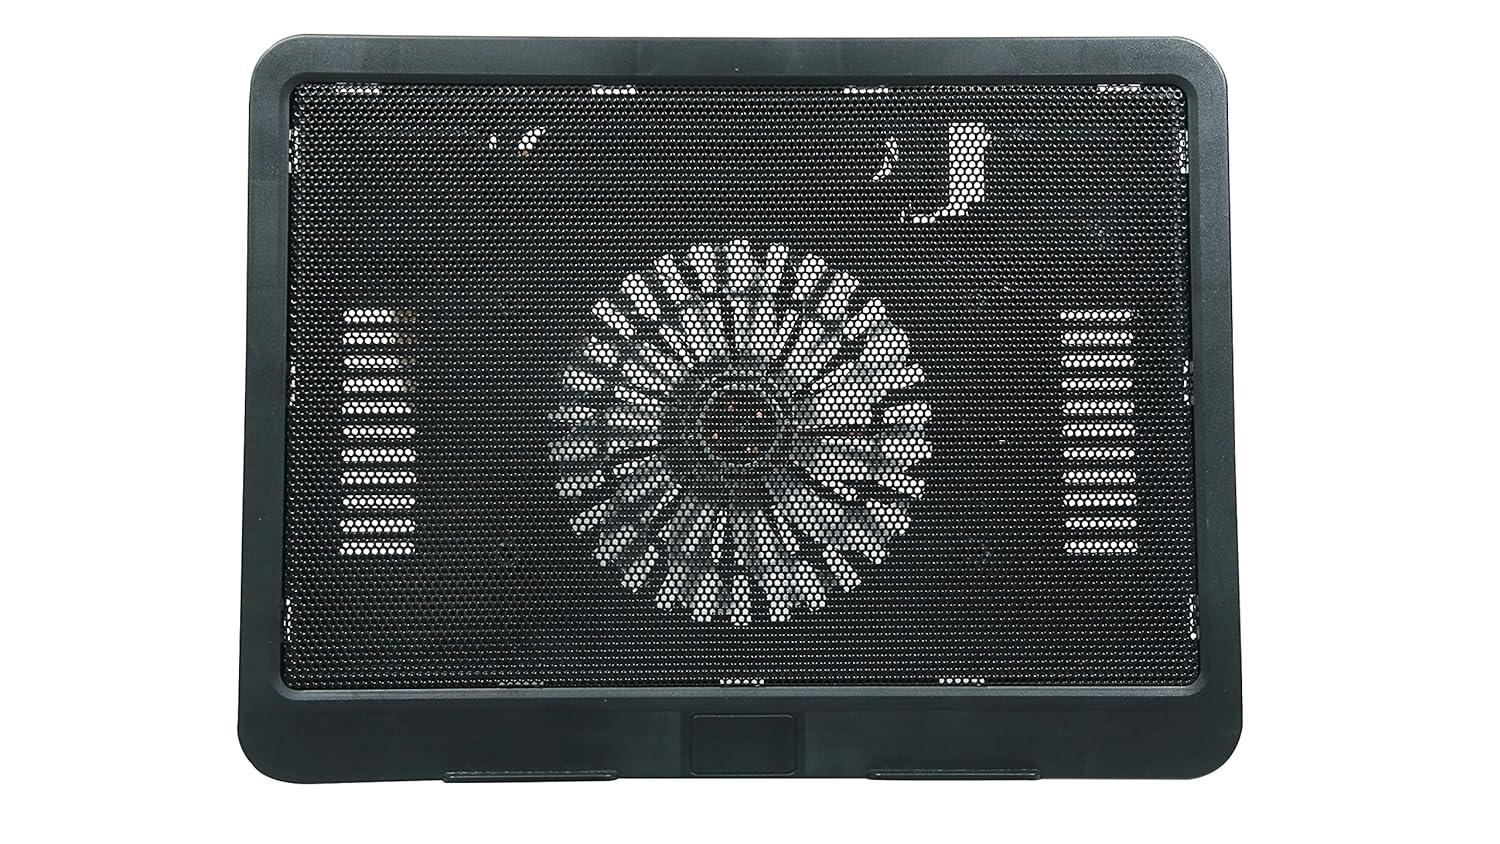 Adnet AD-19 Laptop Fan Cooling Pad | 2 Level Adjustable | 21 DBA Noise Level (Black)